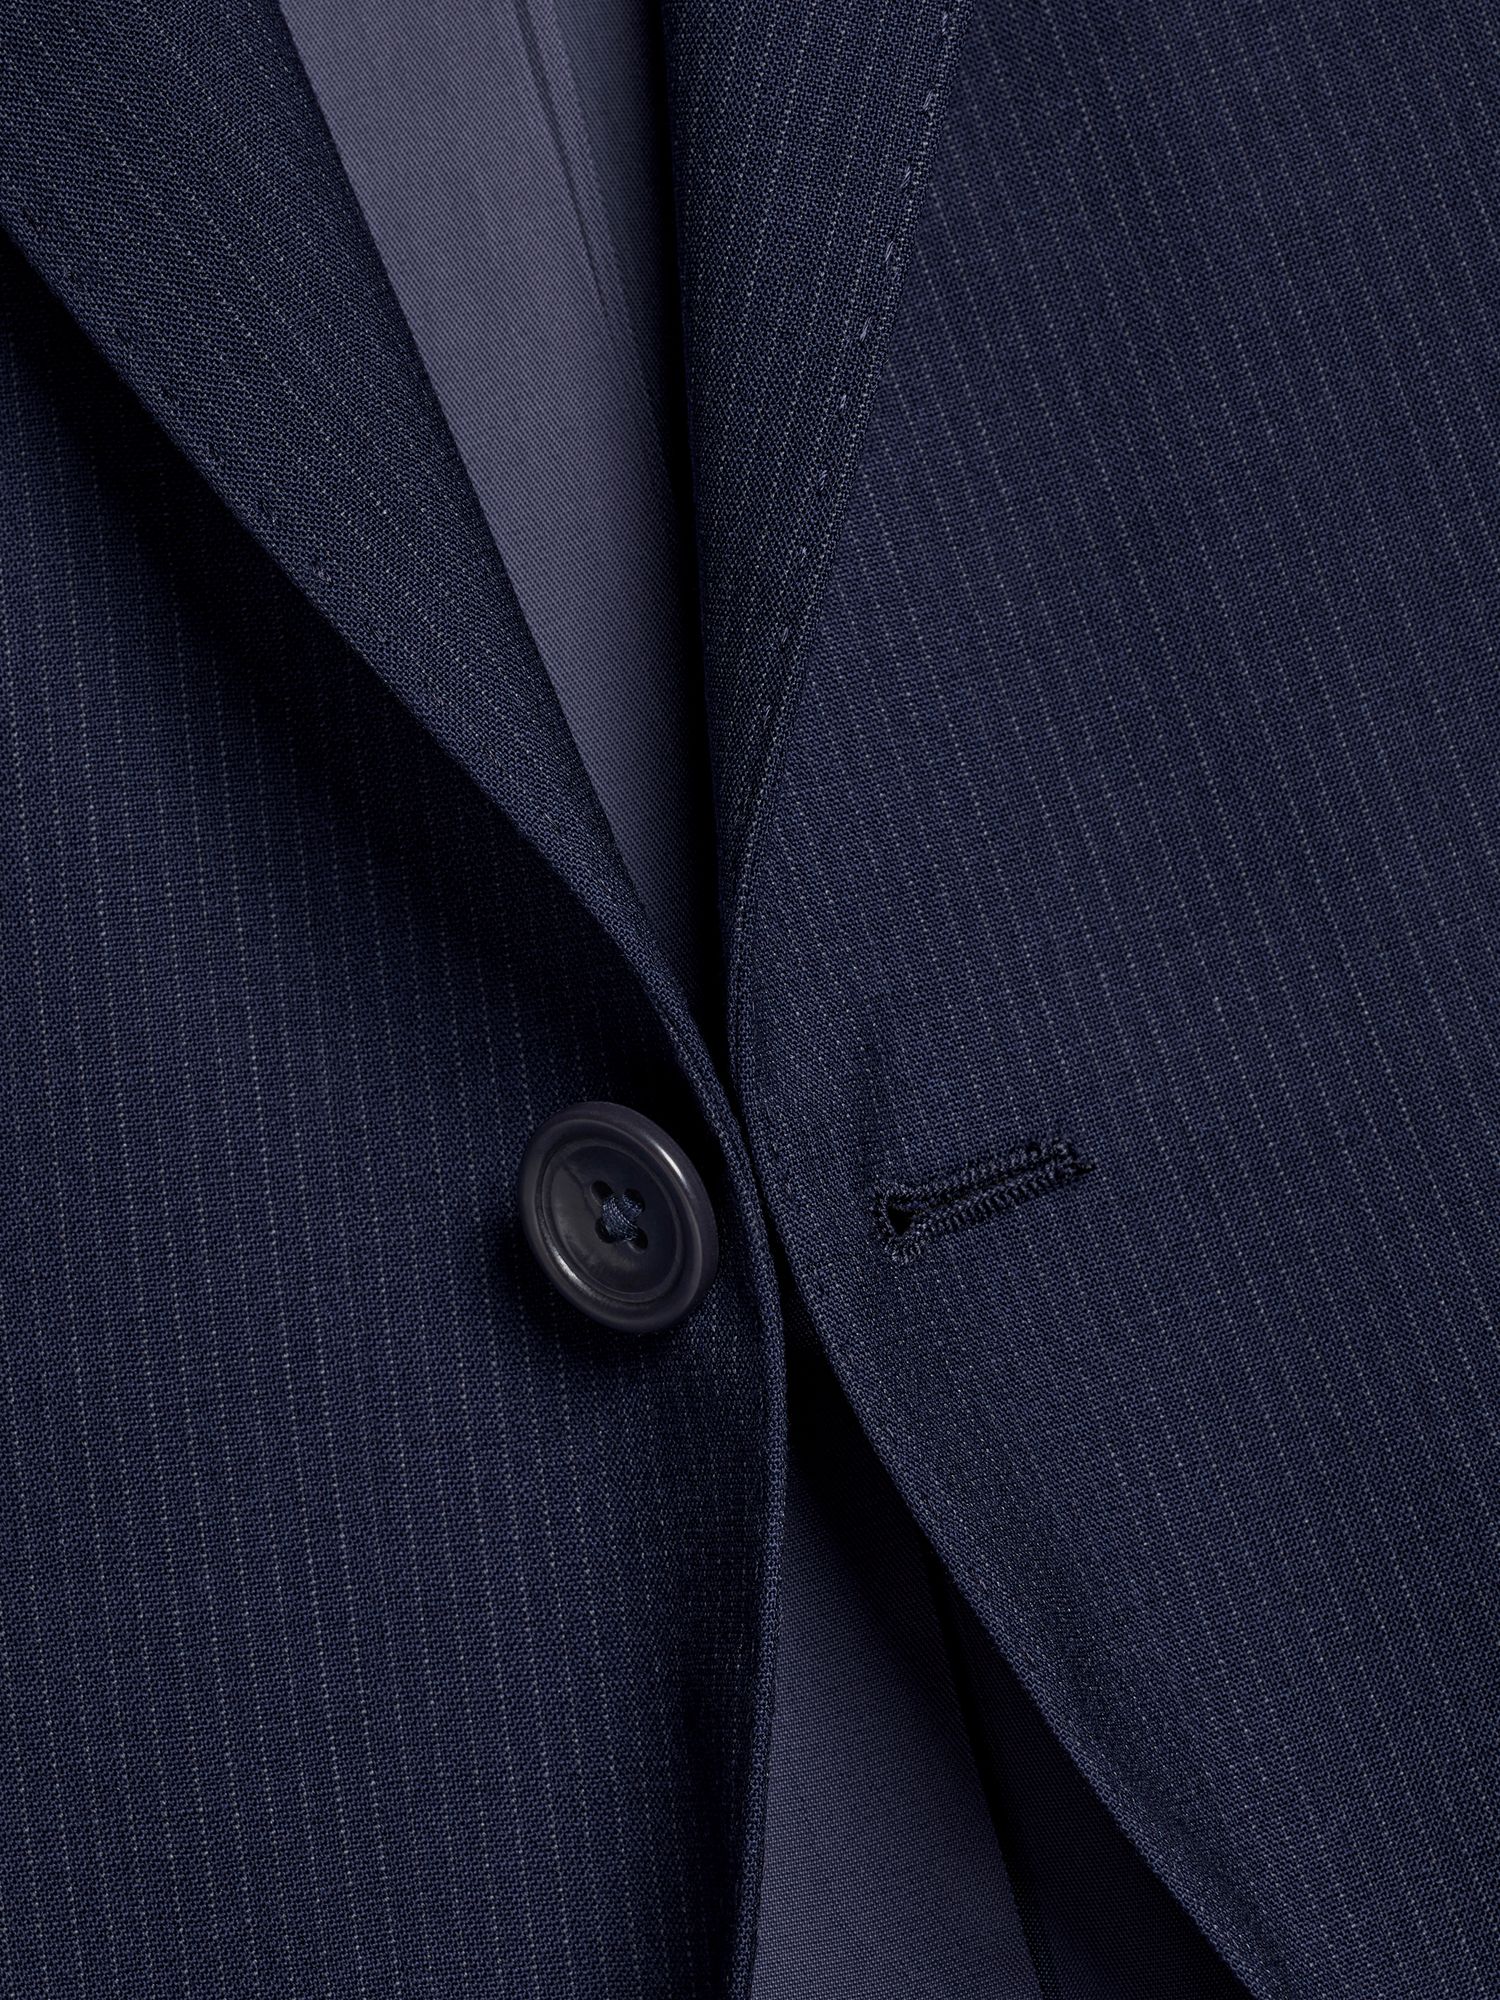 Charles Tyrwhitt Slim Fit Stripe Suit Jacket, Navy at John Lewis & Partners